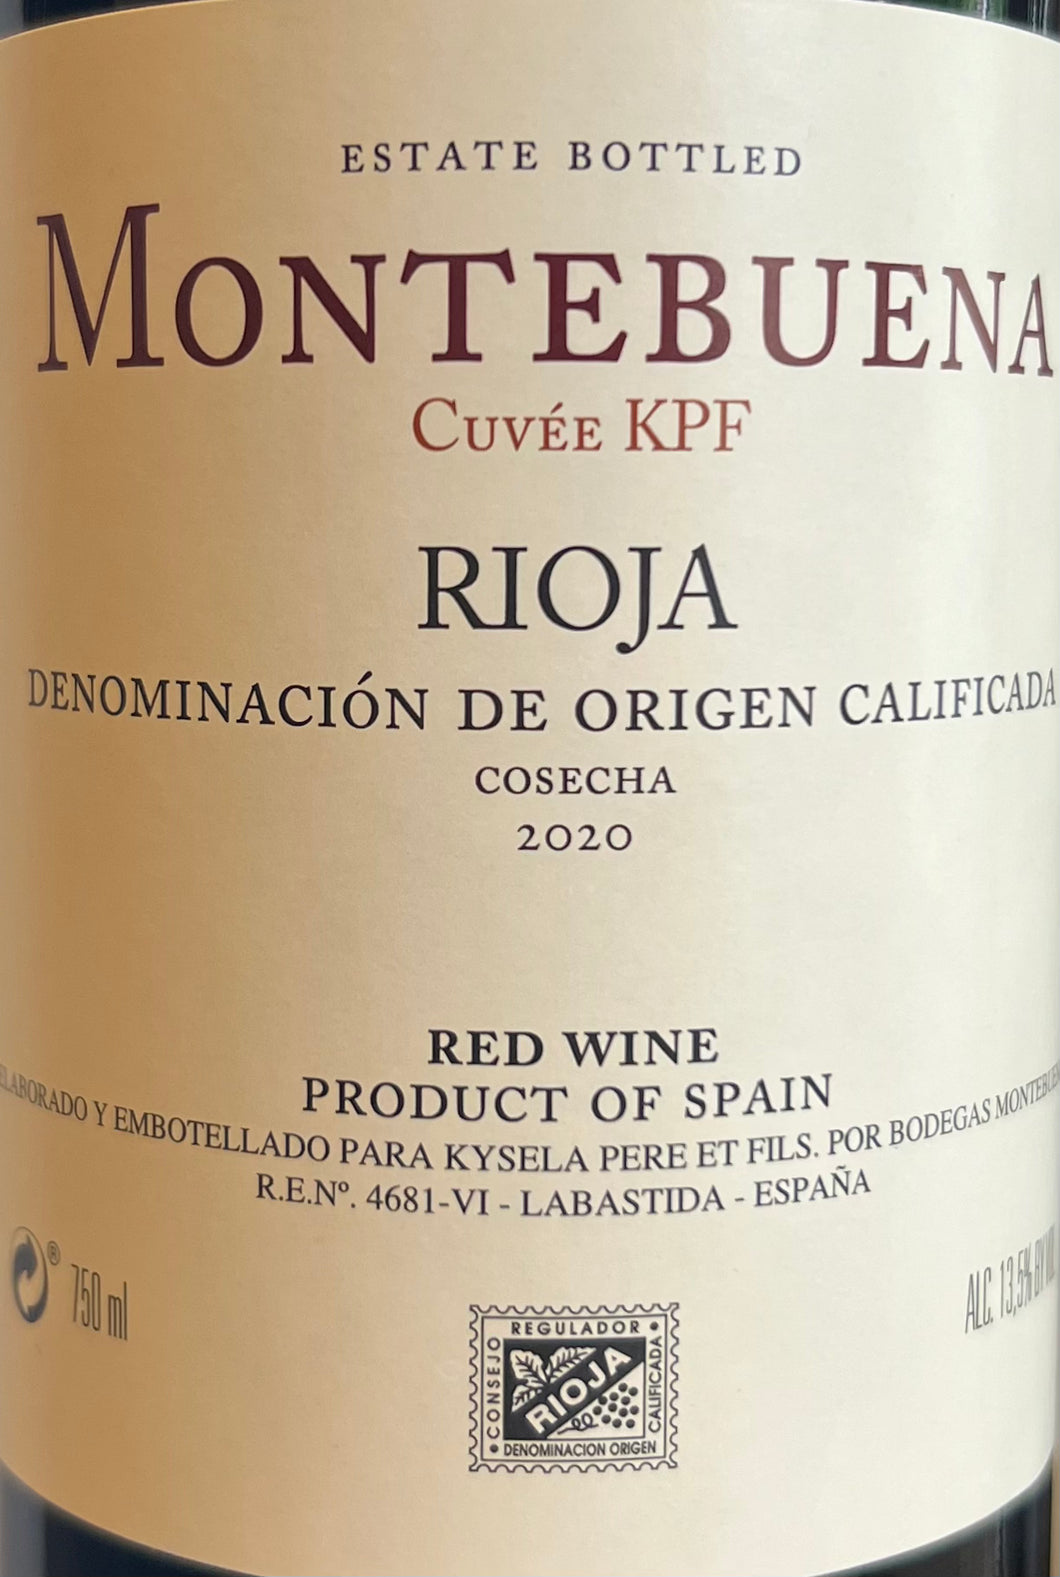 Montebuena 'Cuvee KPF' - Rioja